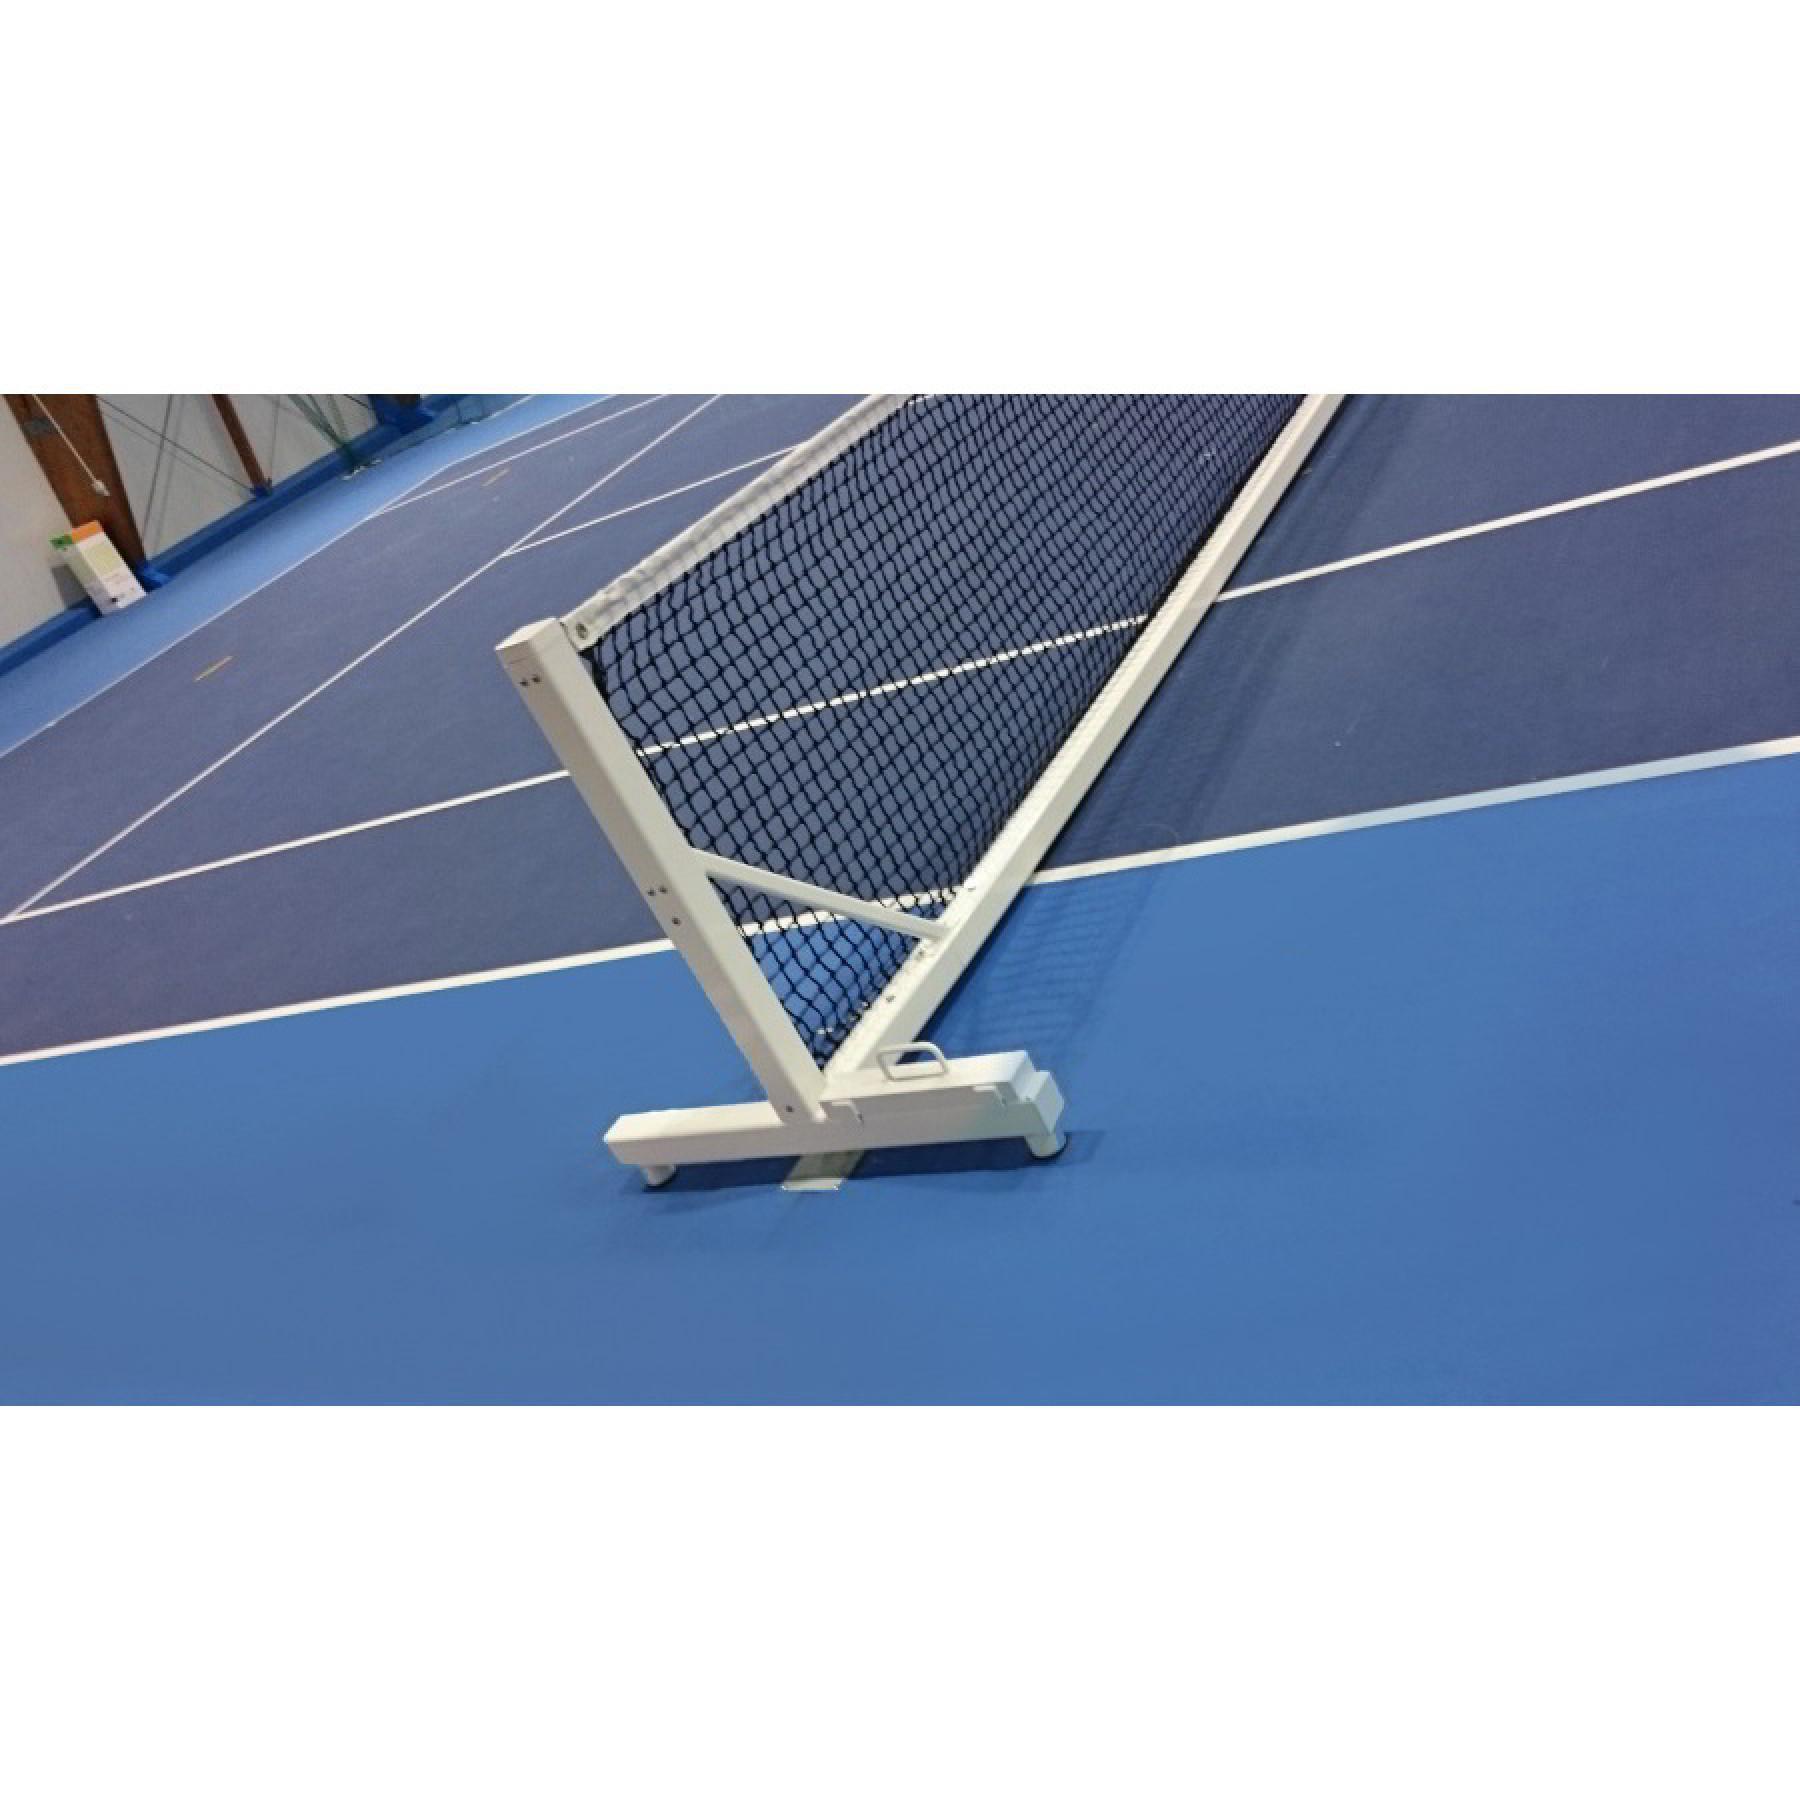 Transportable steel tennis post Carrington